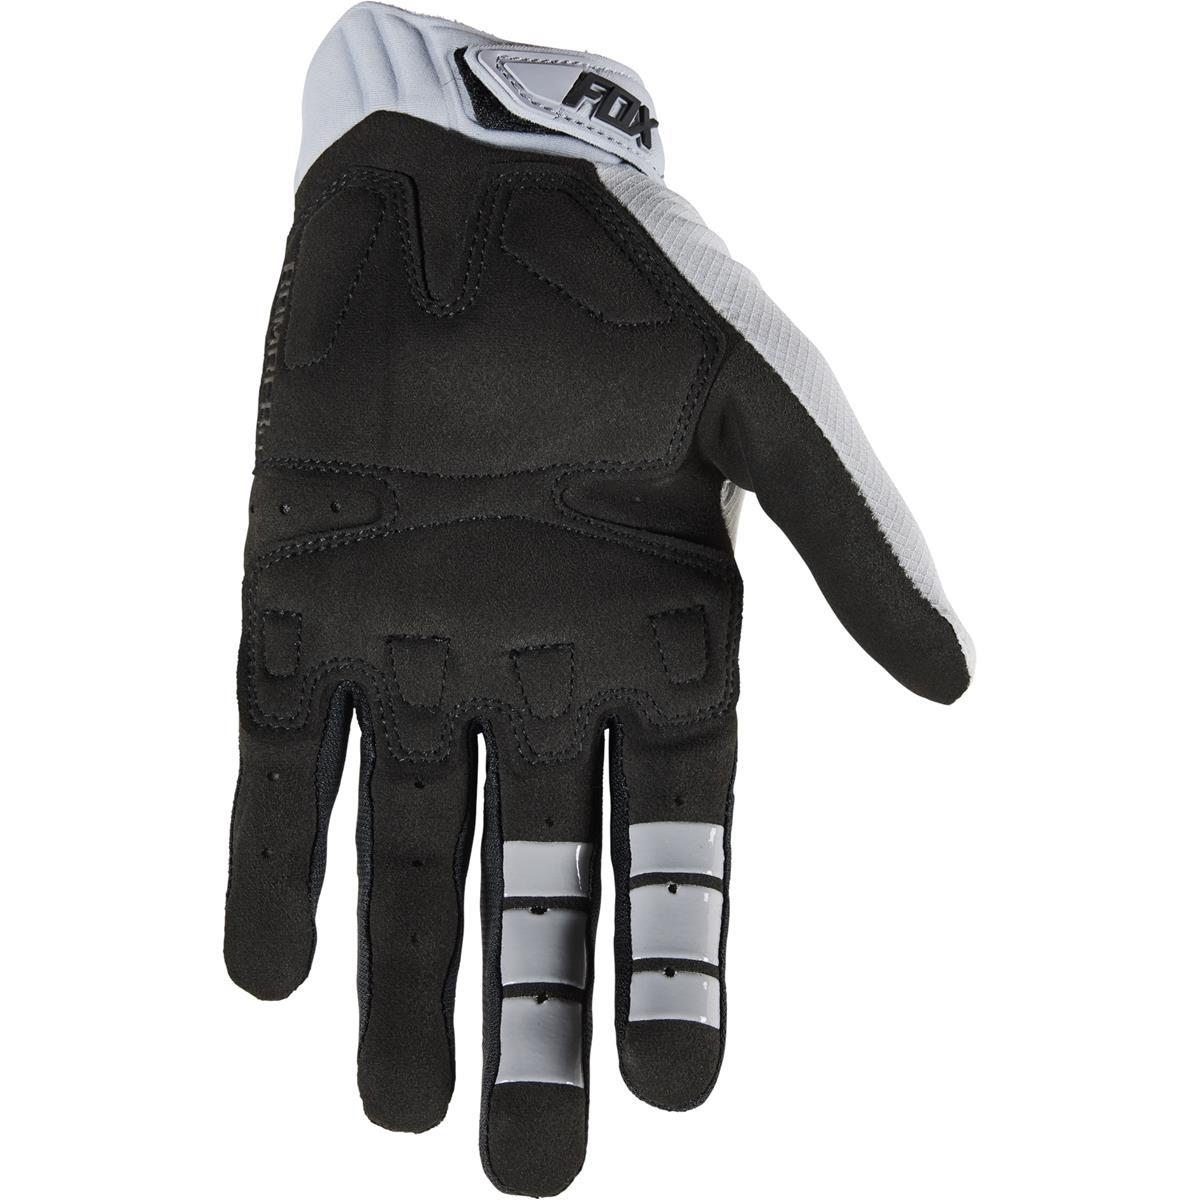 Fox Racing Bomber LT Gloves SS 18